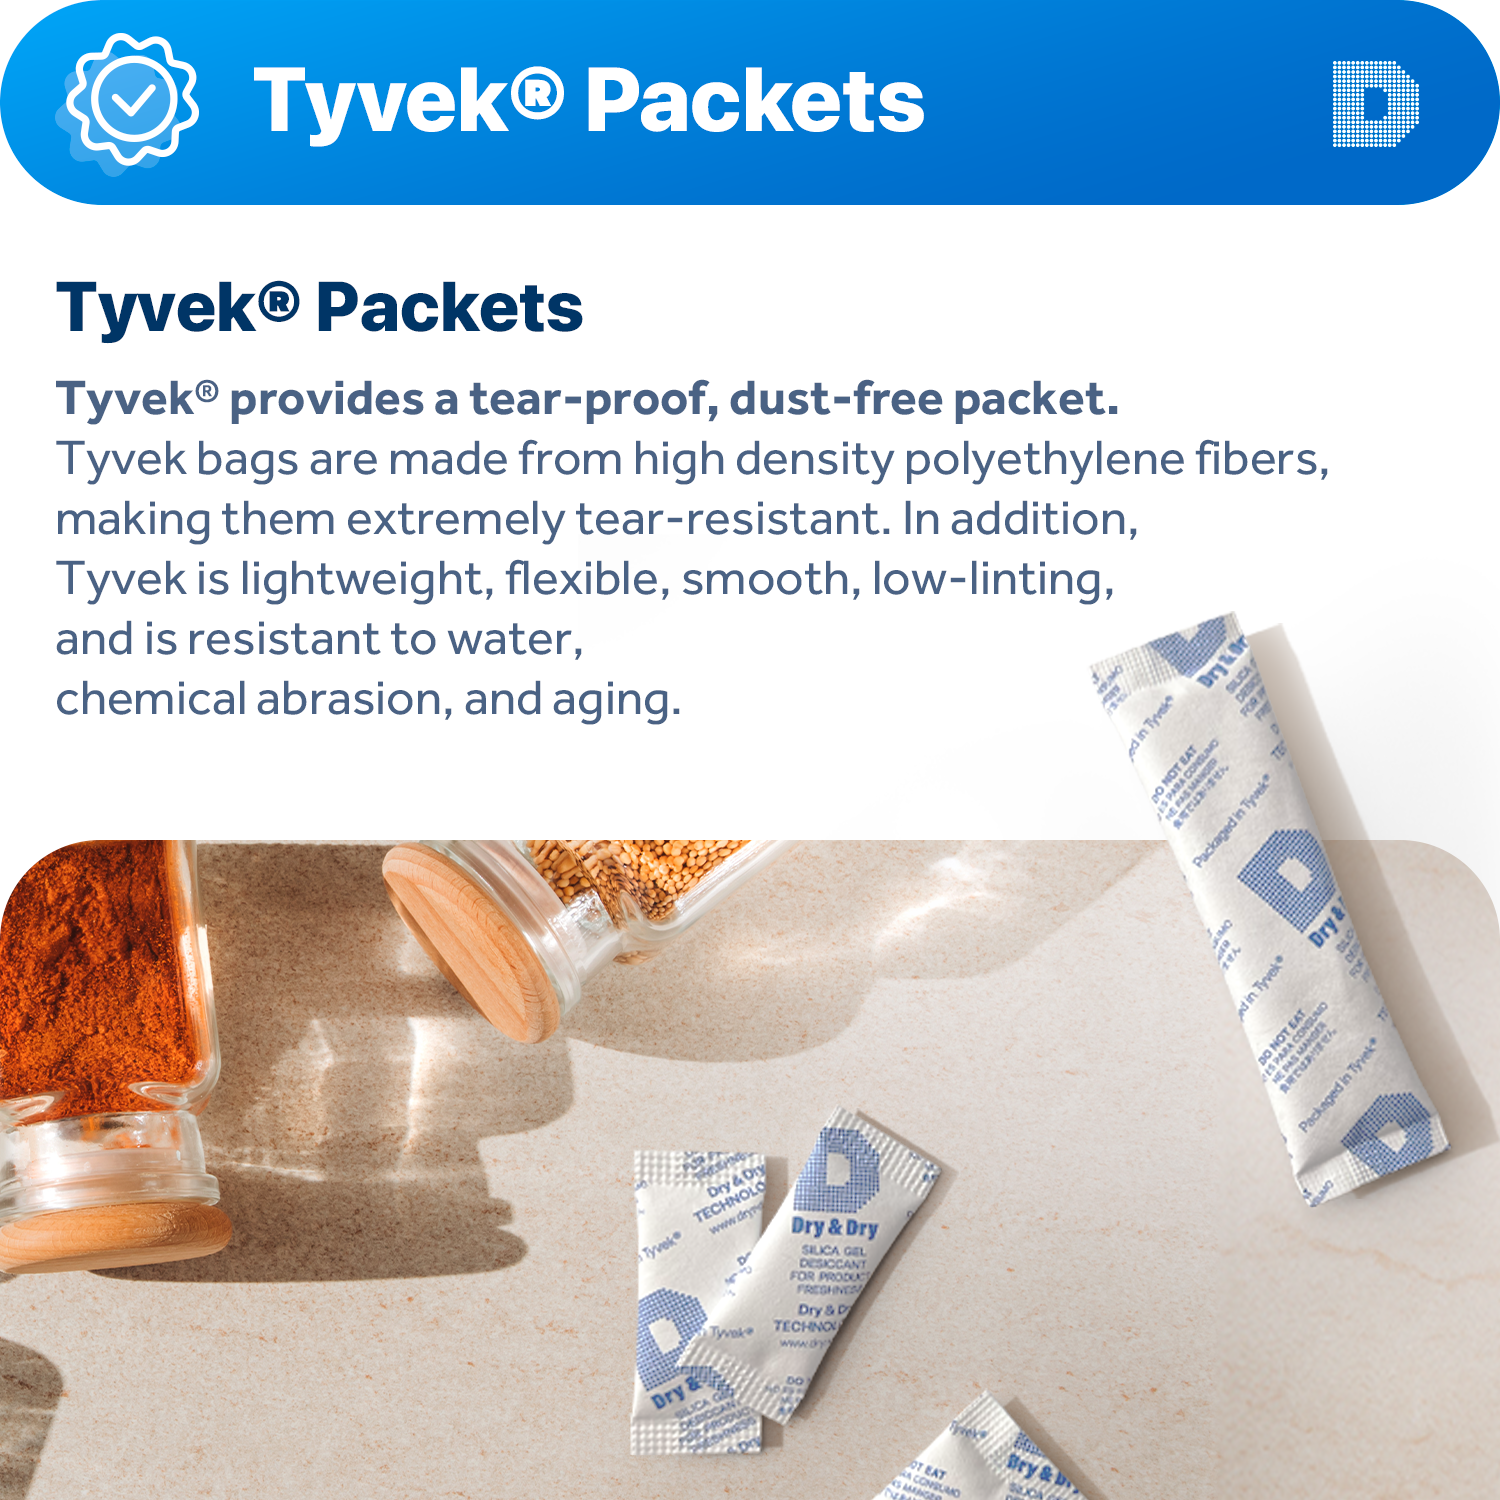 2 Gram [7,000 Packets] Tyvek® Silica Gel Desiccant Packets (FDA Compliant)